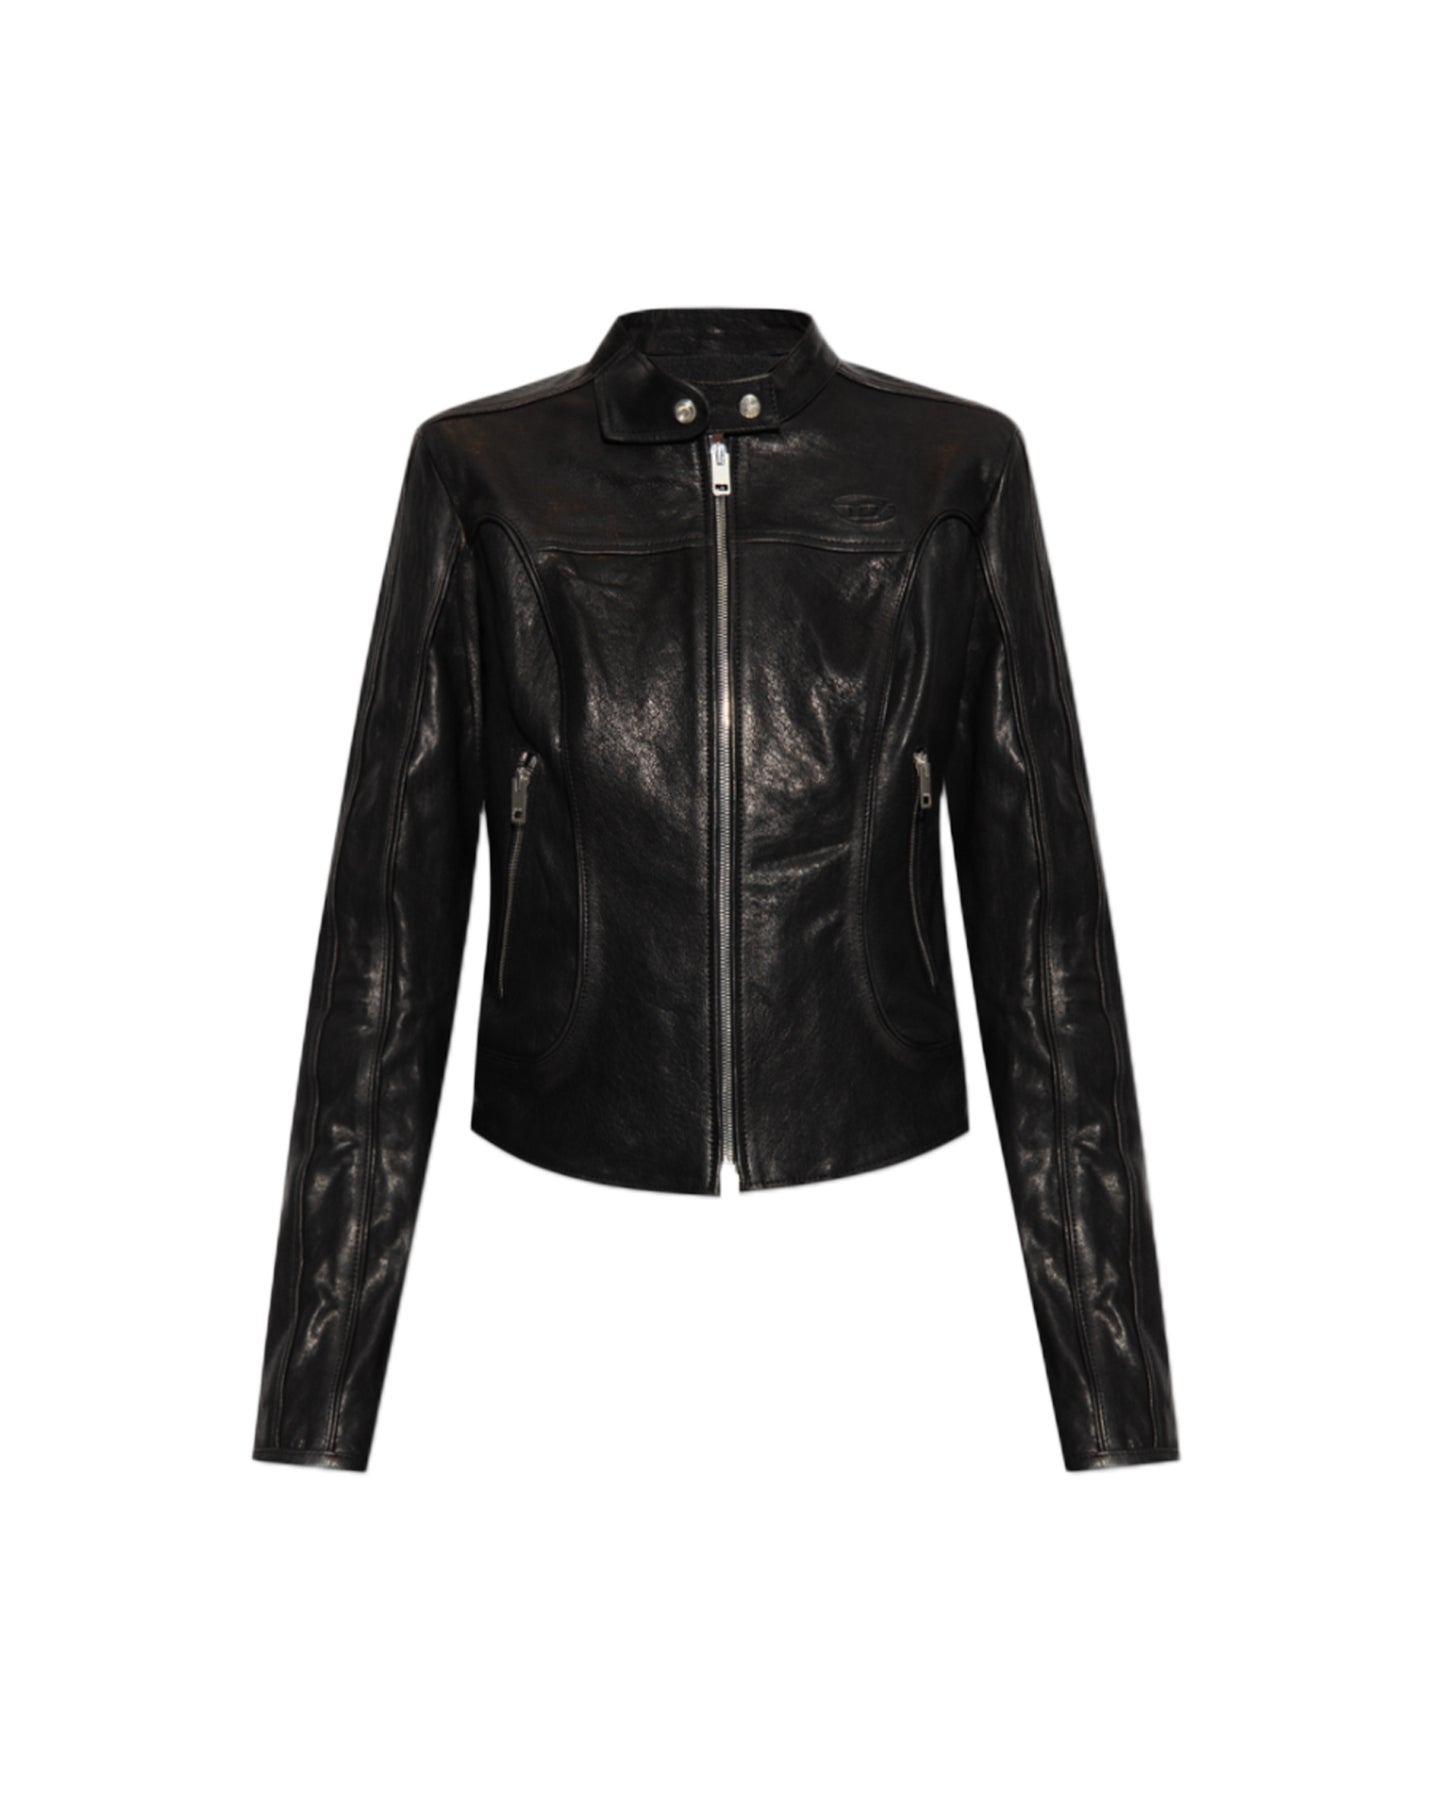 L-FOXI' leather jacket